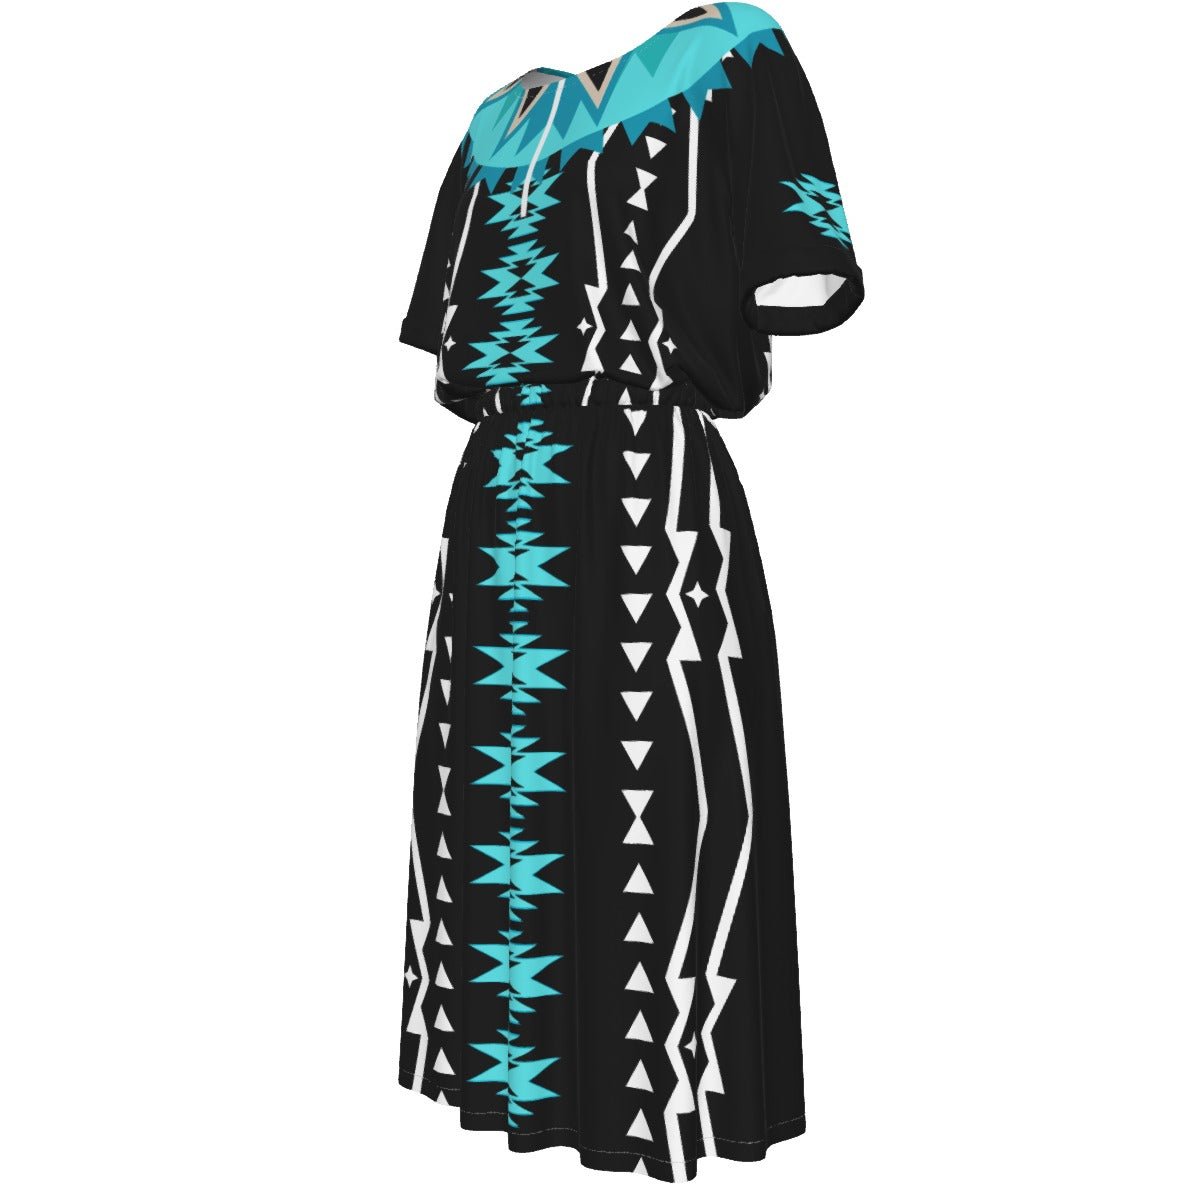 Blue Star Dress - Nikikw Designs